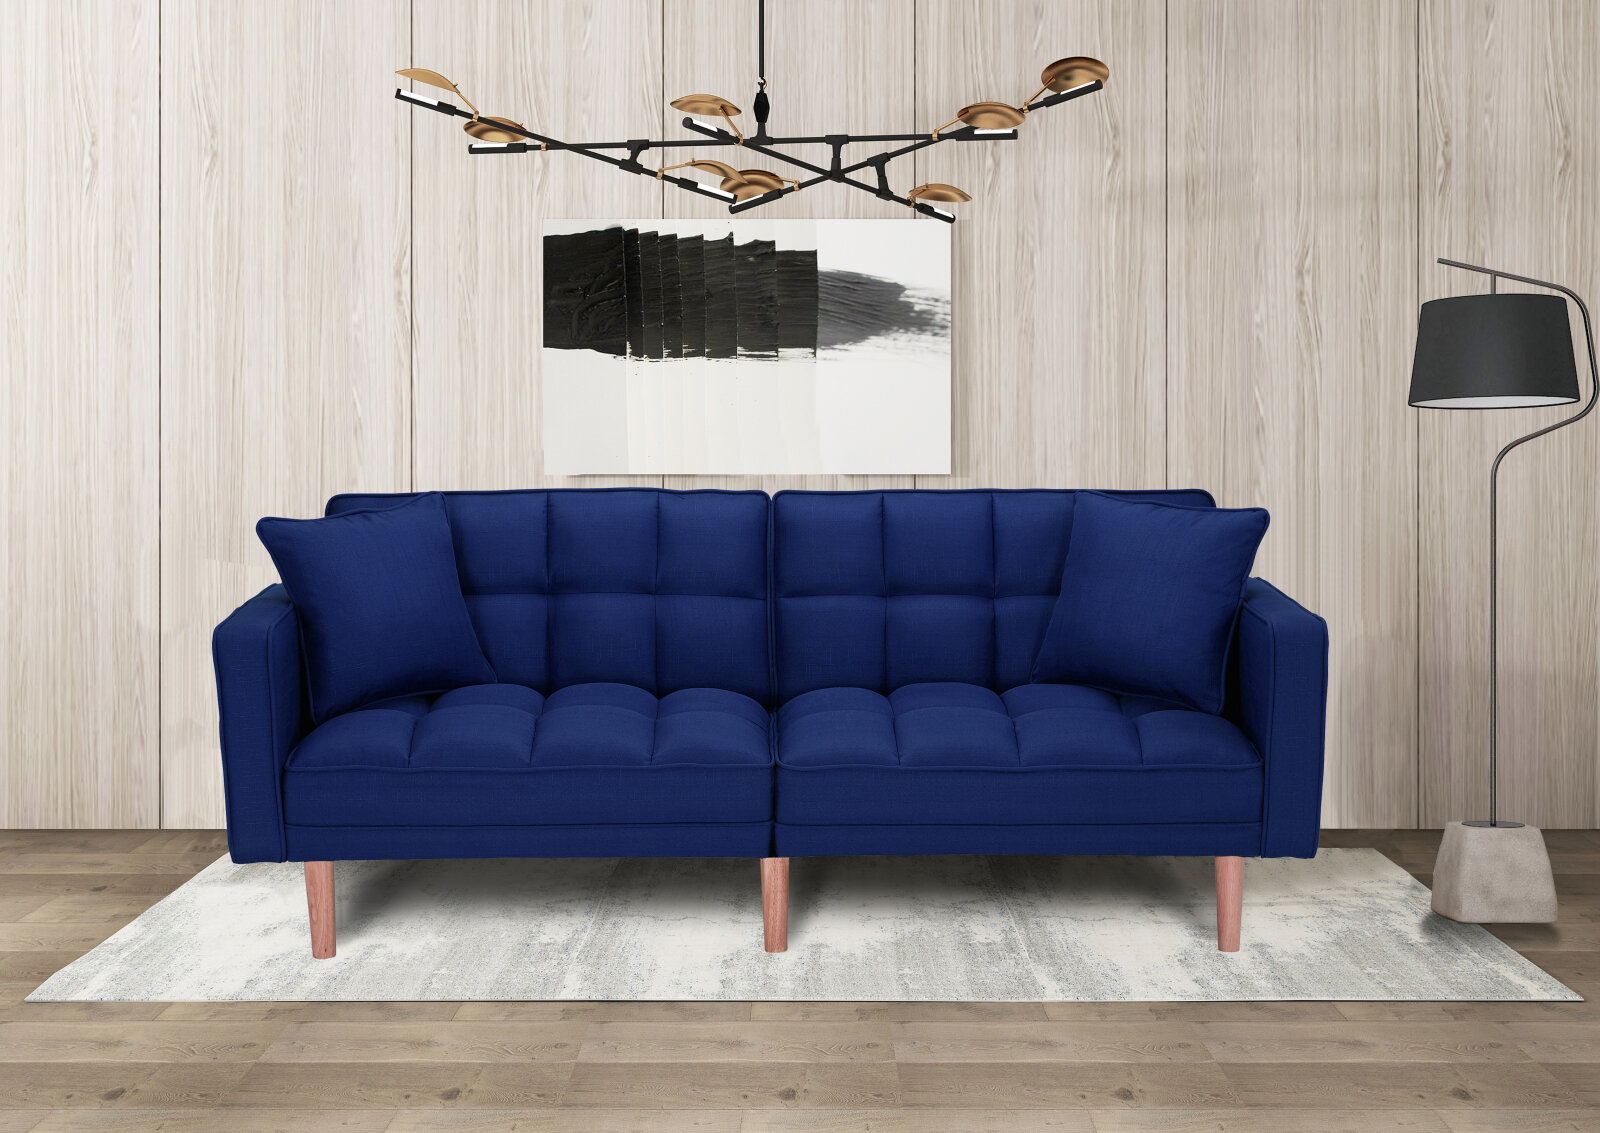 Beverly Furniture F3102 Futon Convertible Sofa Black/White